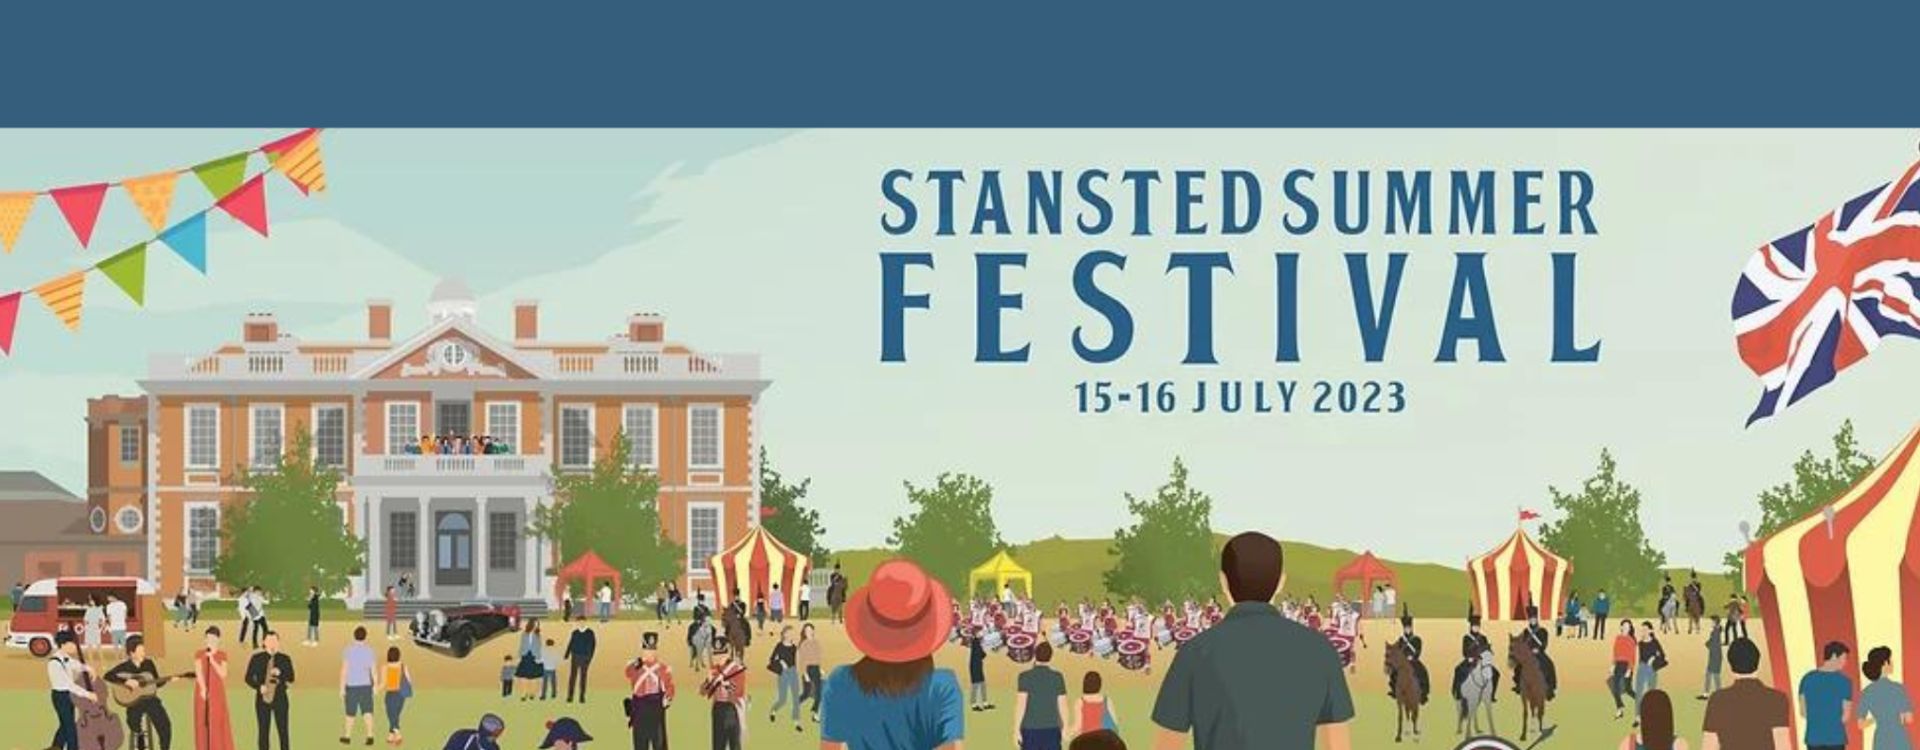 Stansted Summer festival 